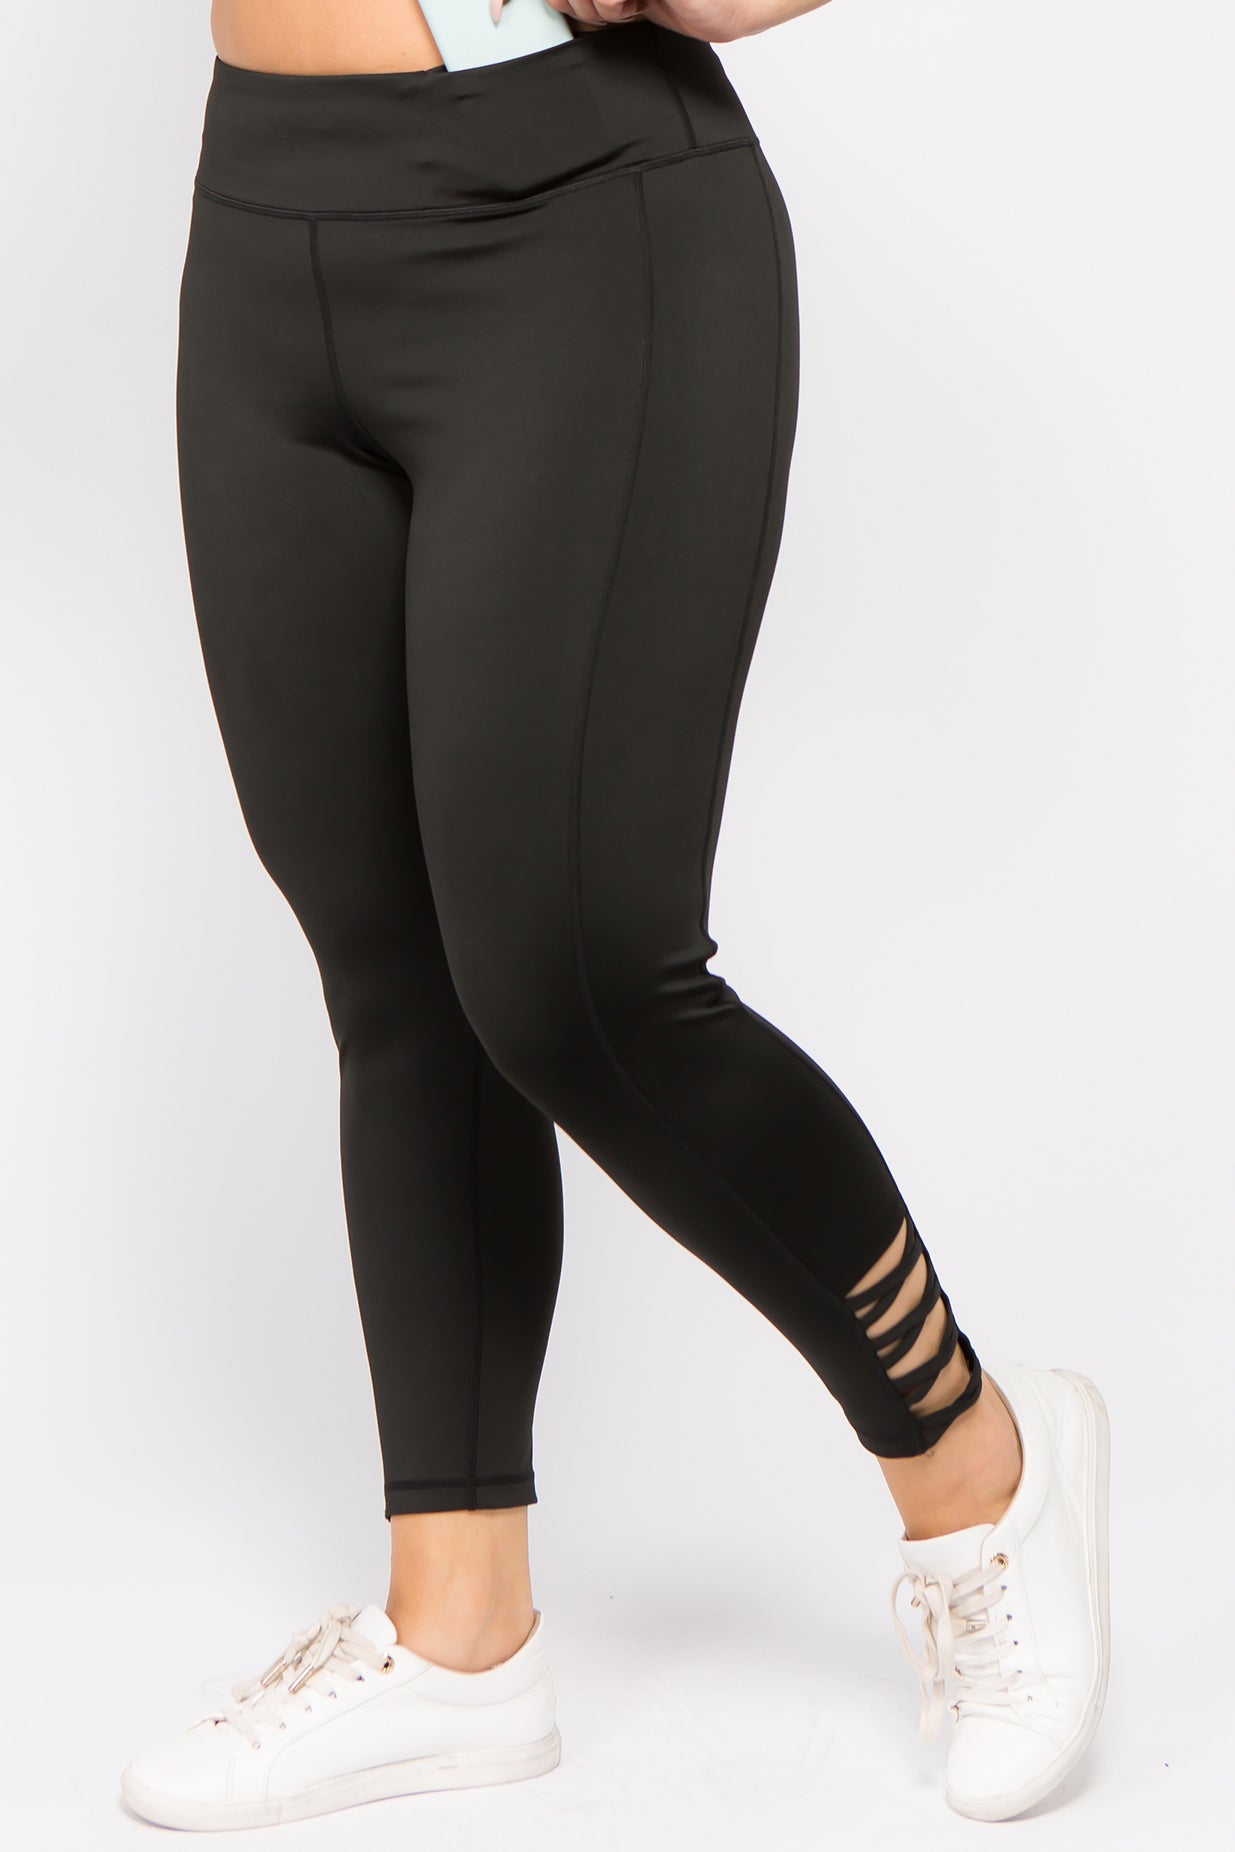 Amazon.com: FUAIOKT Plus Size Capri Leggings for Women High Waist Butt  Lifting Yoga Pants Ankle Cutout Workout Running Leggings Black : Sports &  Outdoors